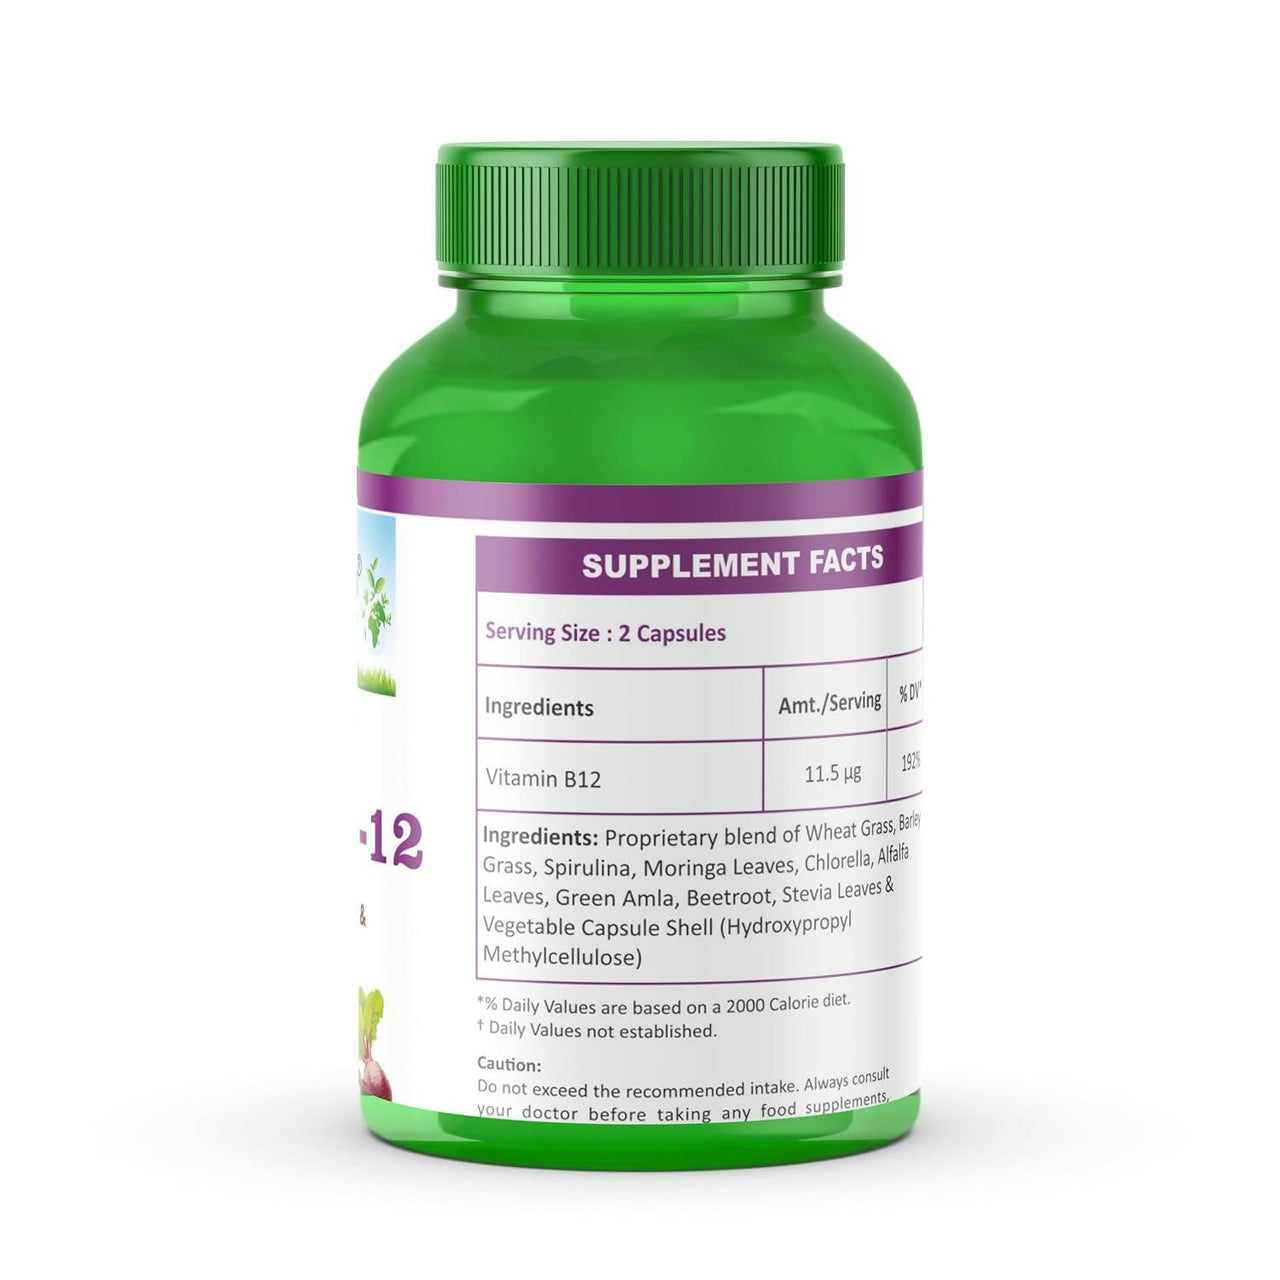 Planet Ayurveda Plant Based Vitamin B12 Capsules - Distacart